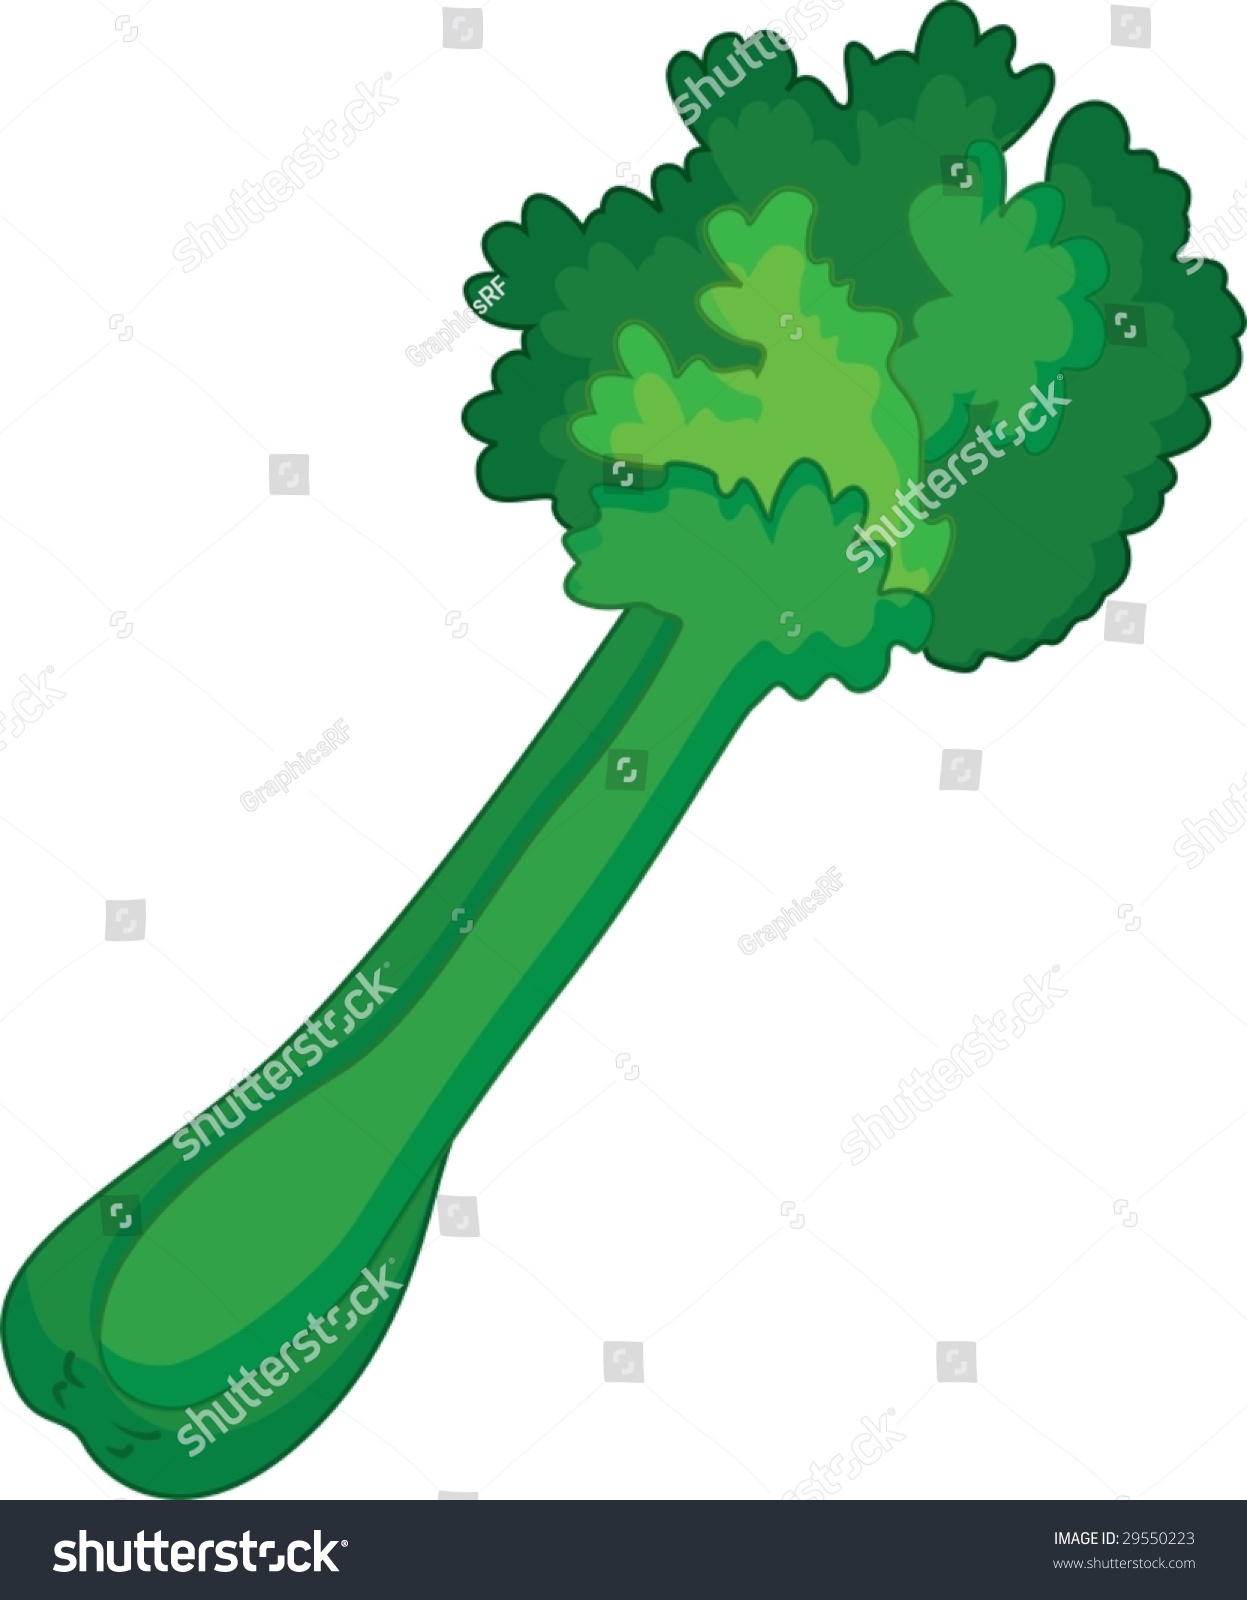 Cartoon Illustration Of A Celery - 29550223 : Shutterstock